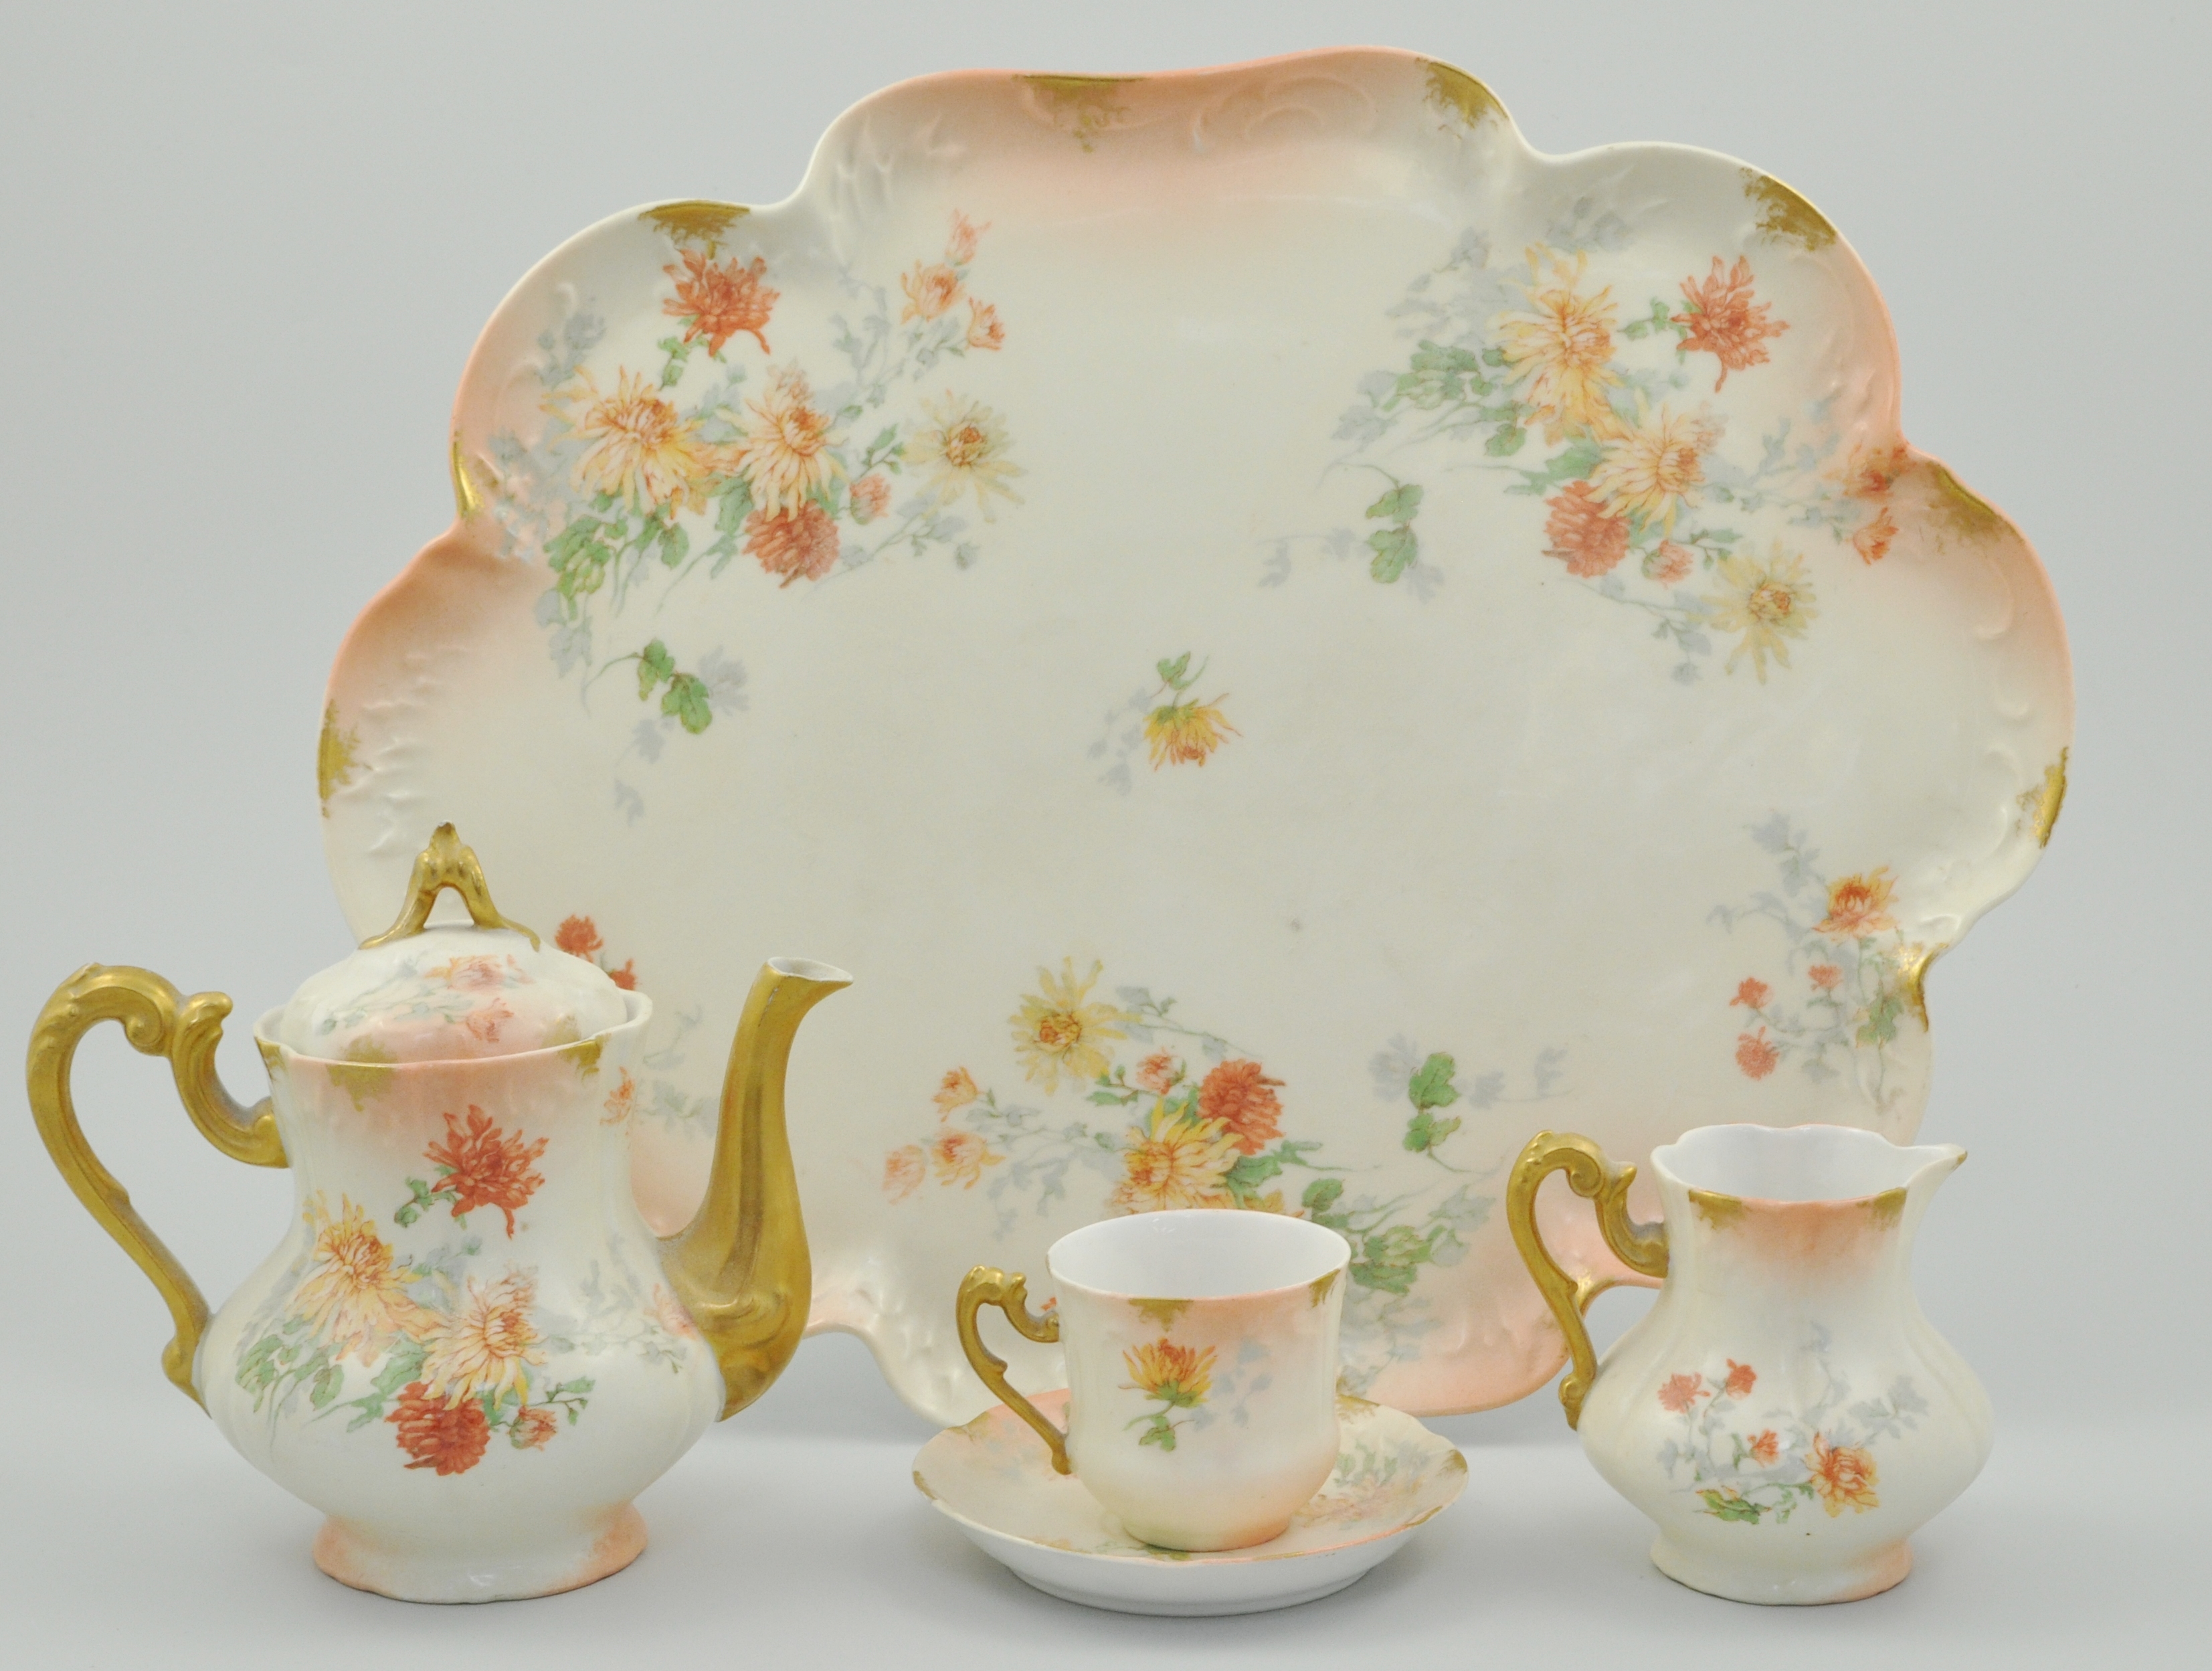 French porcelain part cabaret set, peach and floral decoration, comprising of a teapot, milk jug,